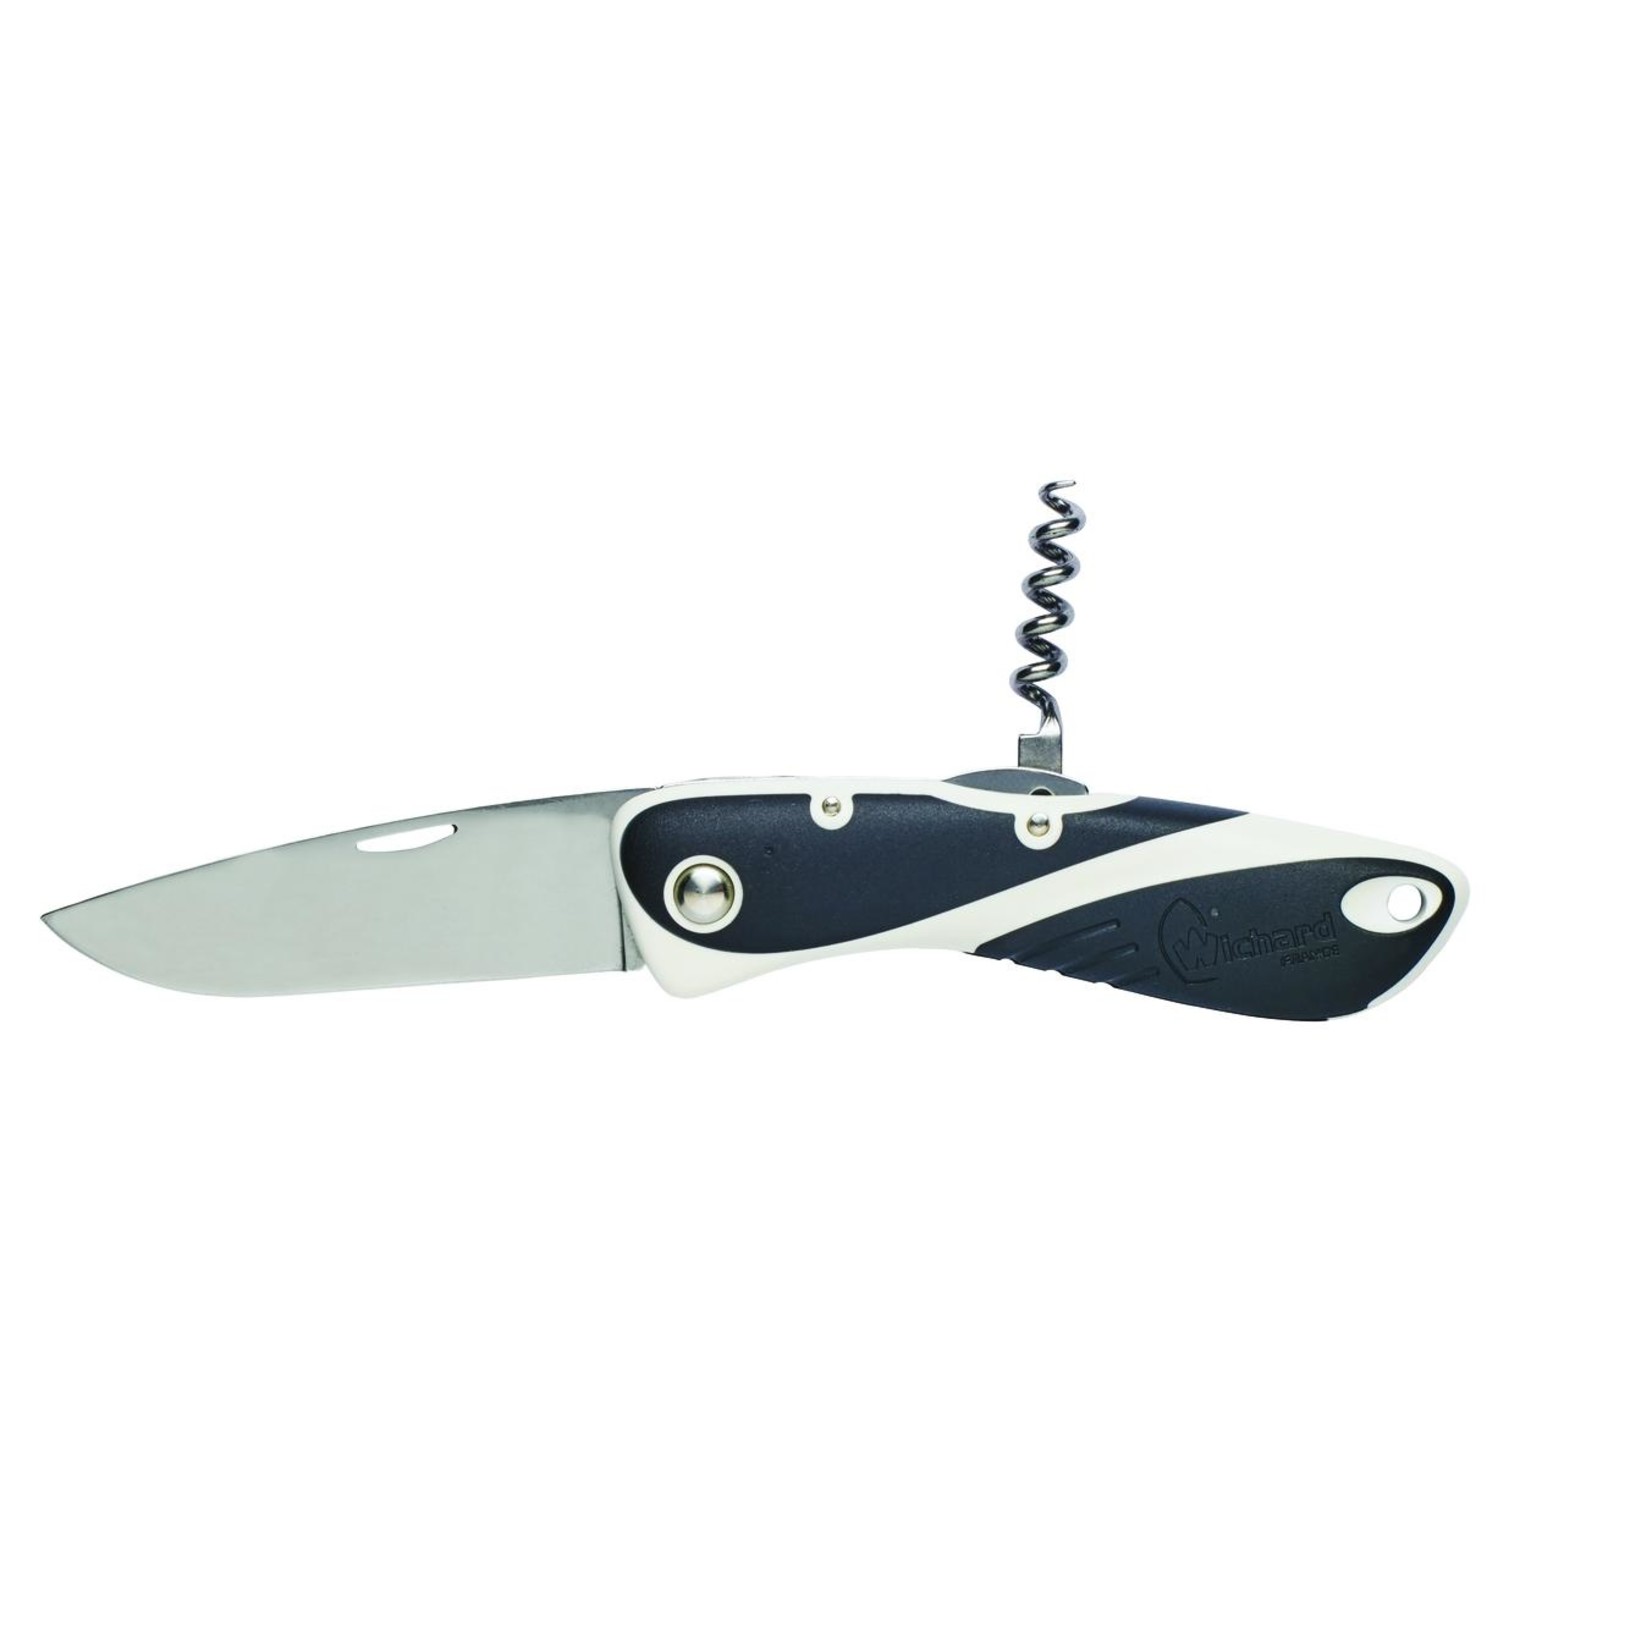 Wichard Aquaterra knife - Single plain blade & corkscrew - Black